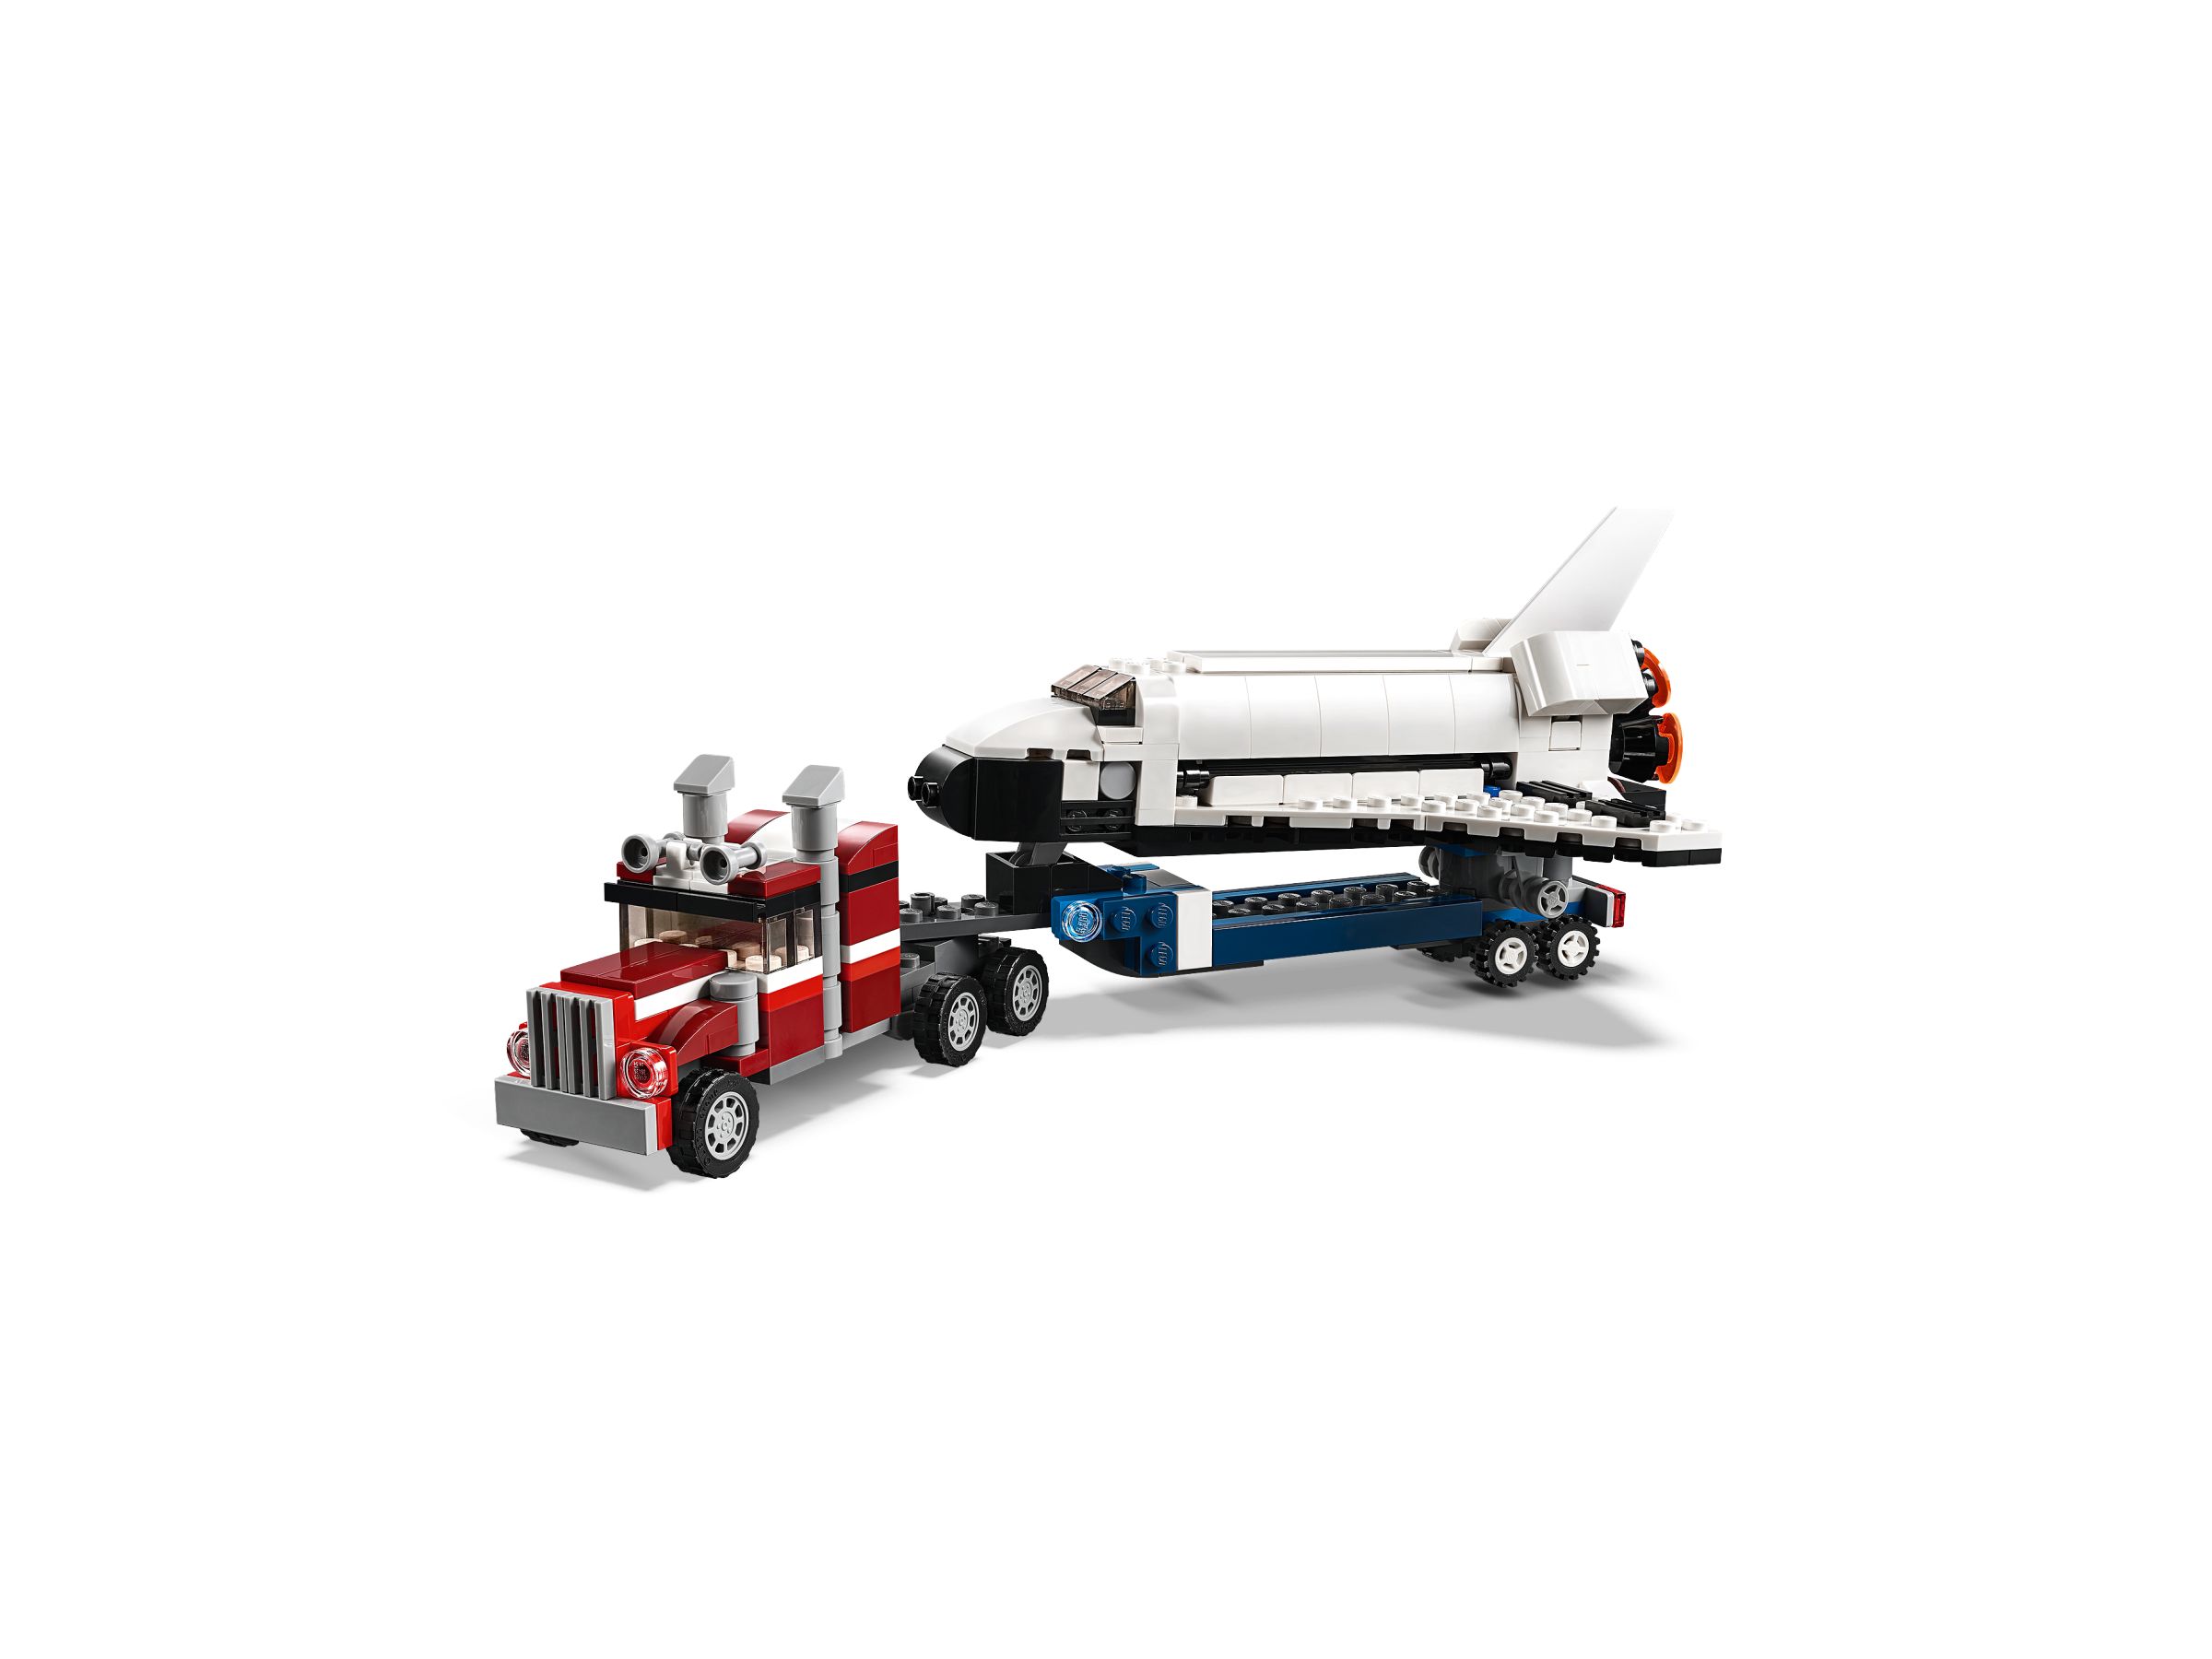 LEGO Creator 31091 Transporter für Space Shuttle LEGO_31091_alt2.jpg